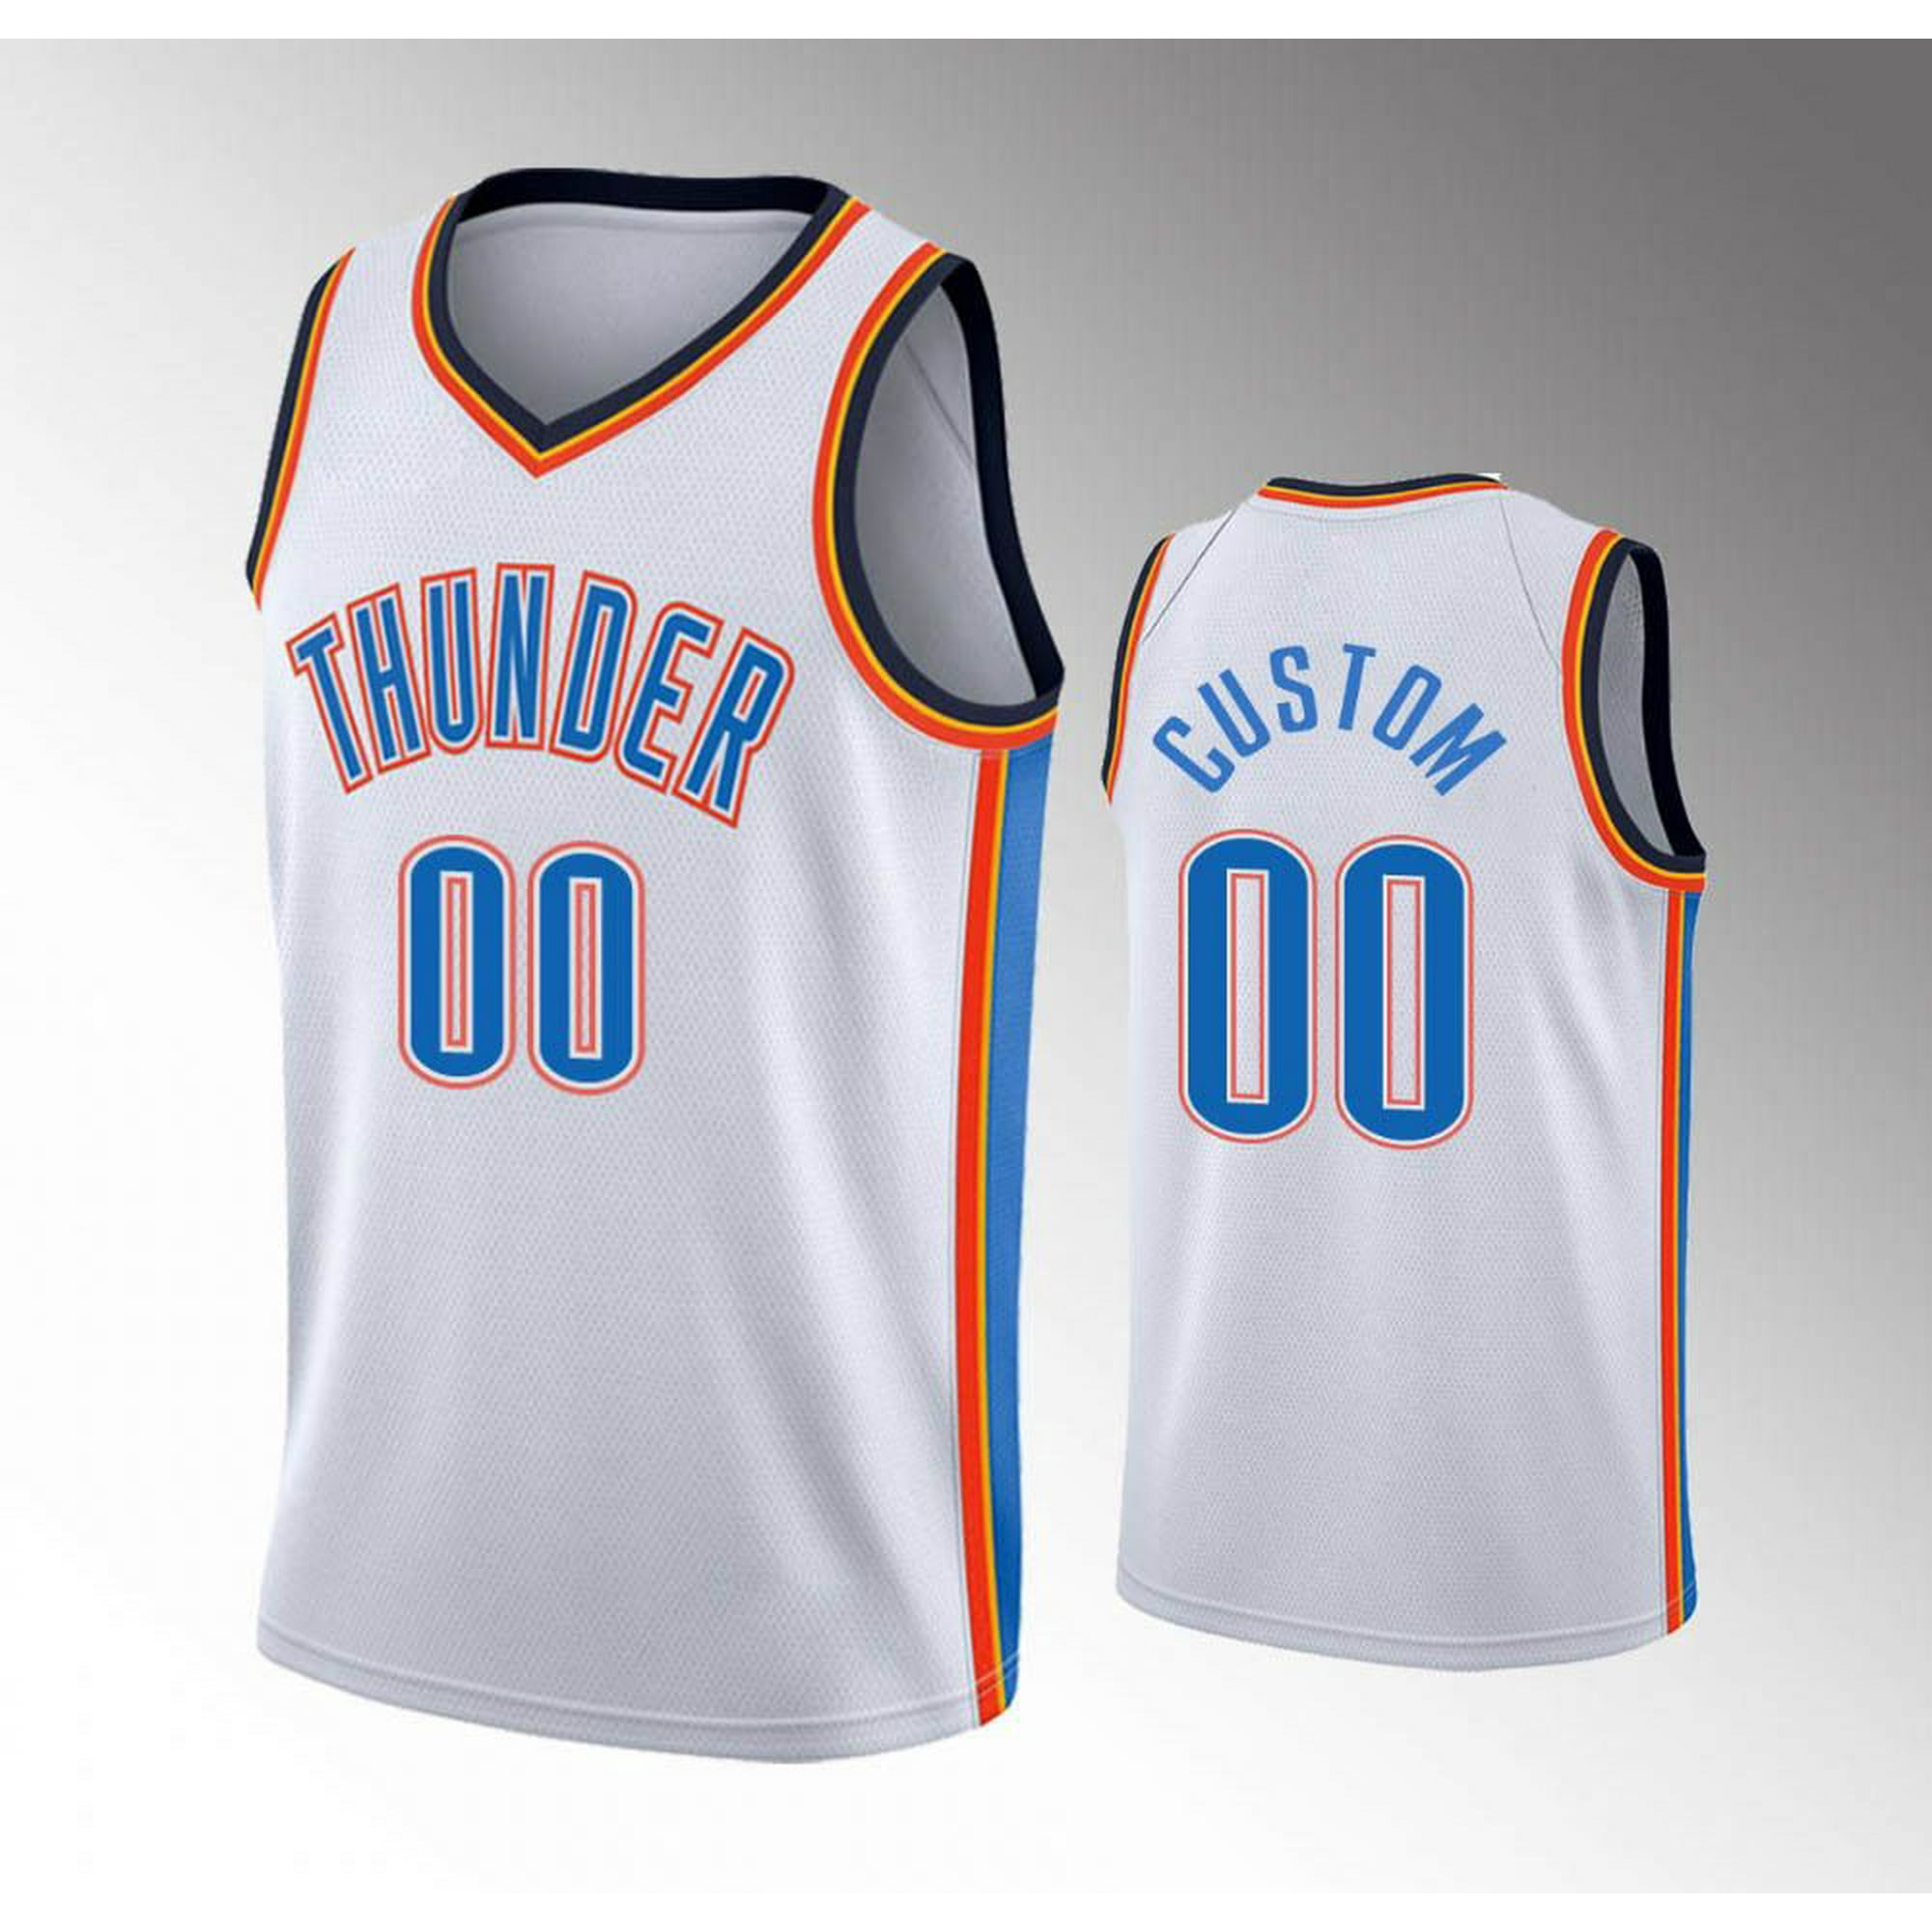 Men's Shai Gilgeous-Alexander Blue Oklahoma City Thunder Player Jersey